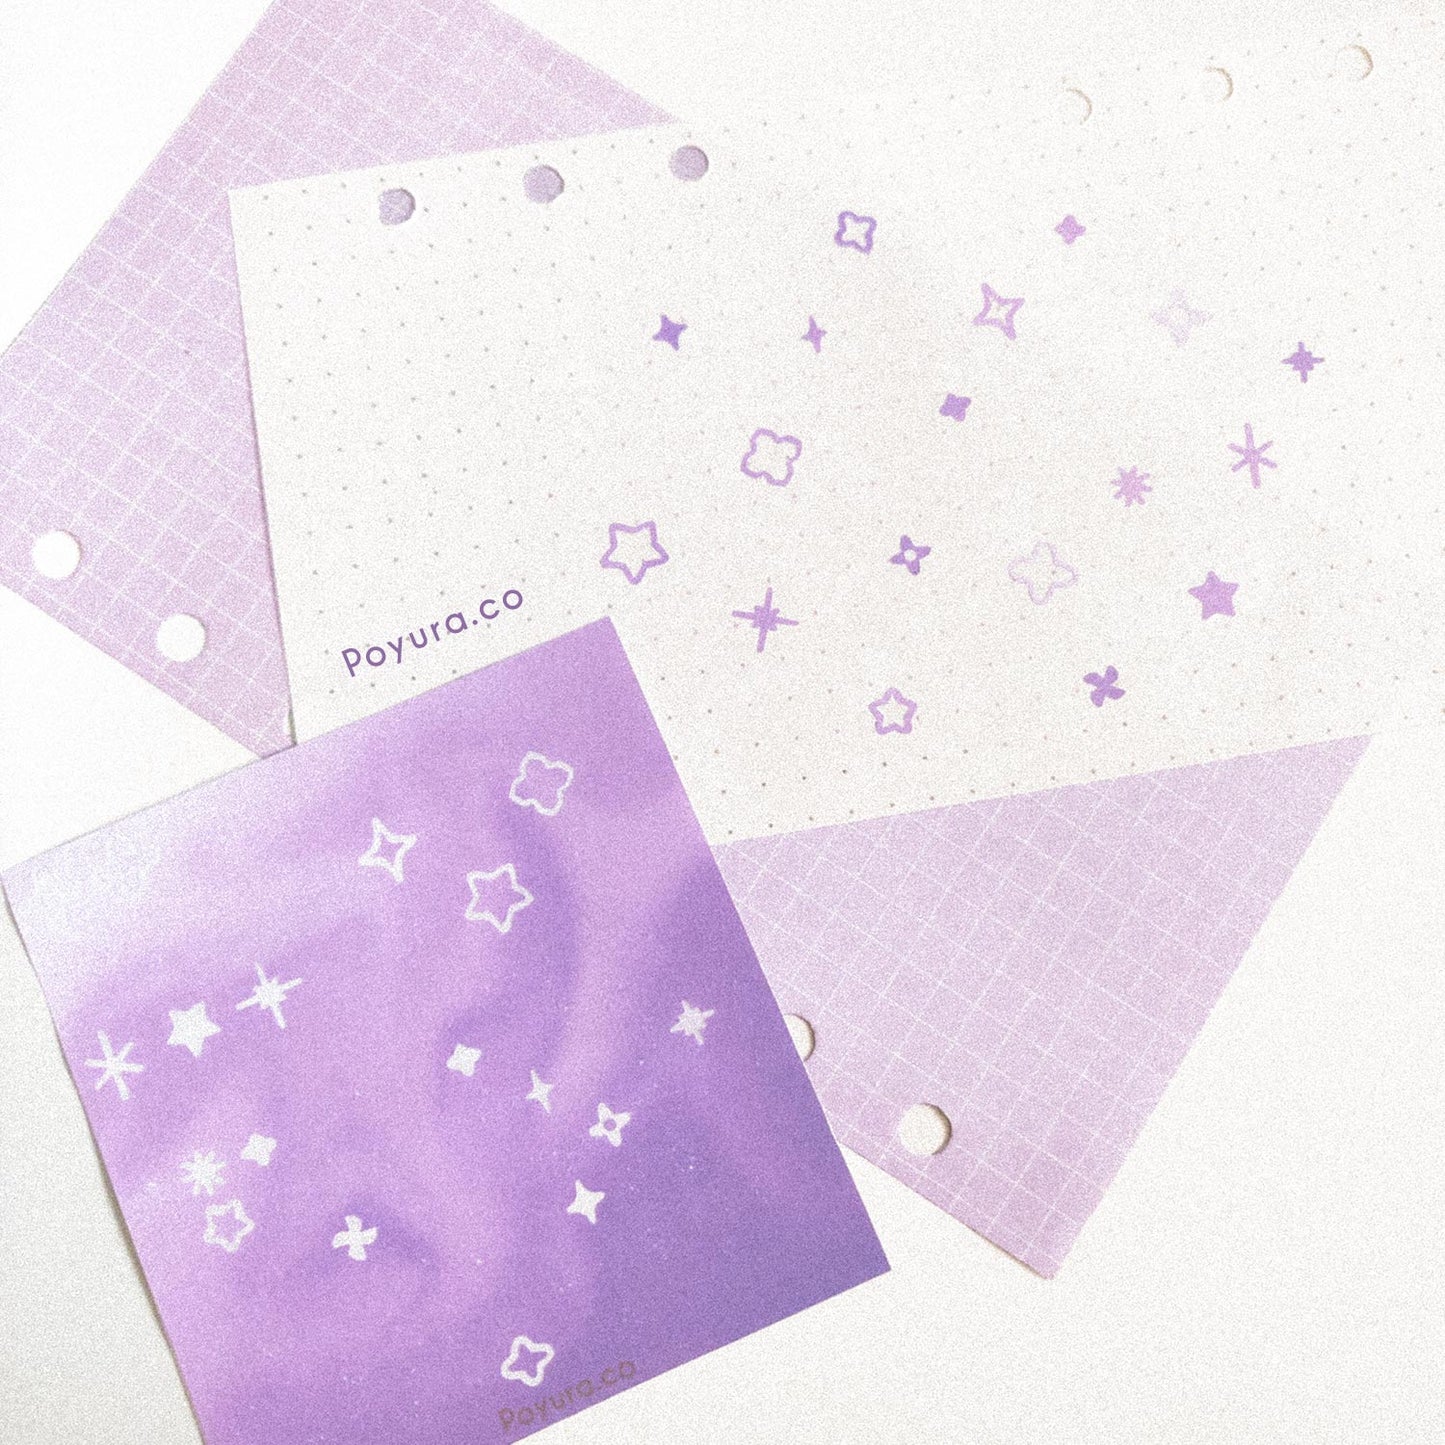 Sparkle polco deco sticker sheet